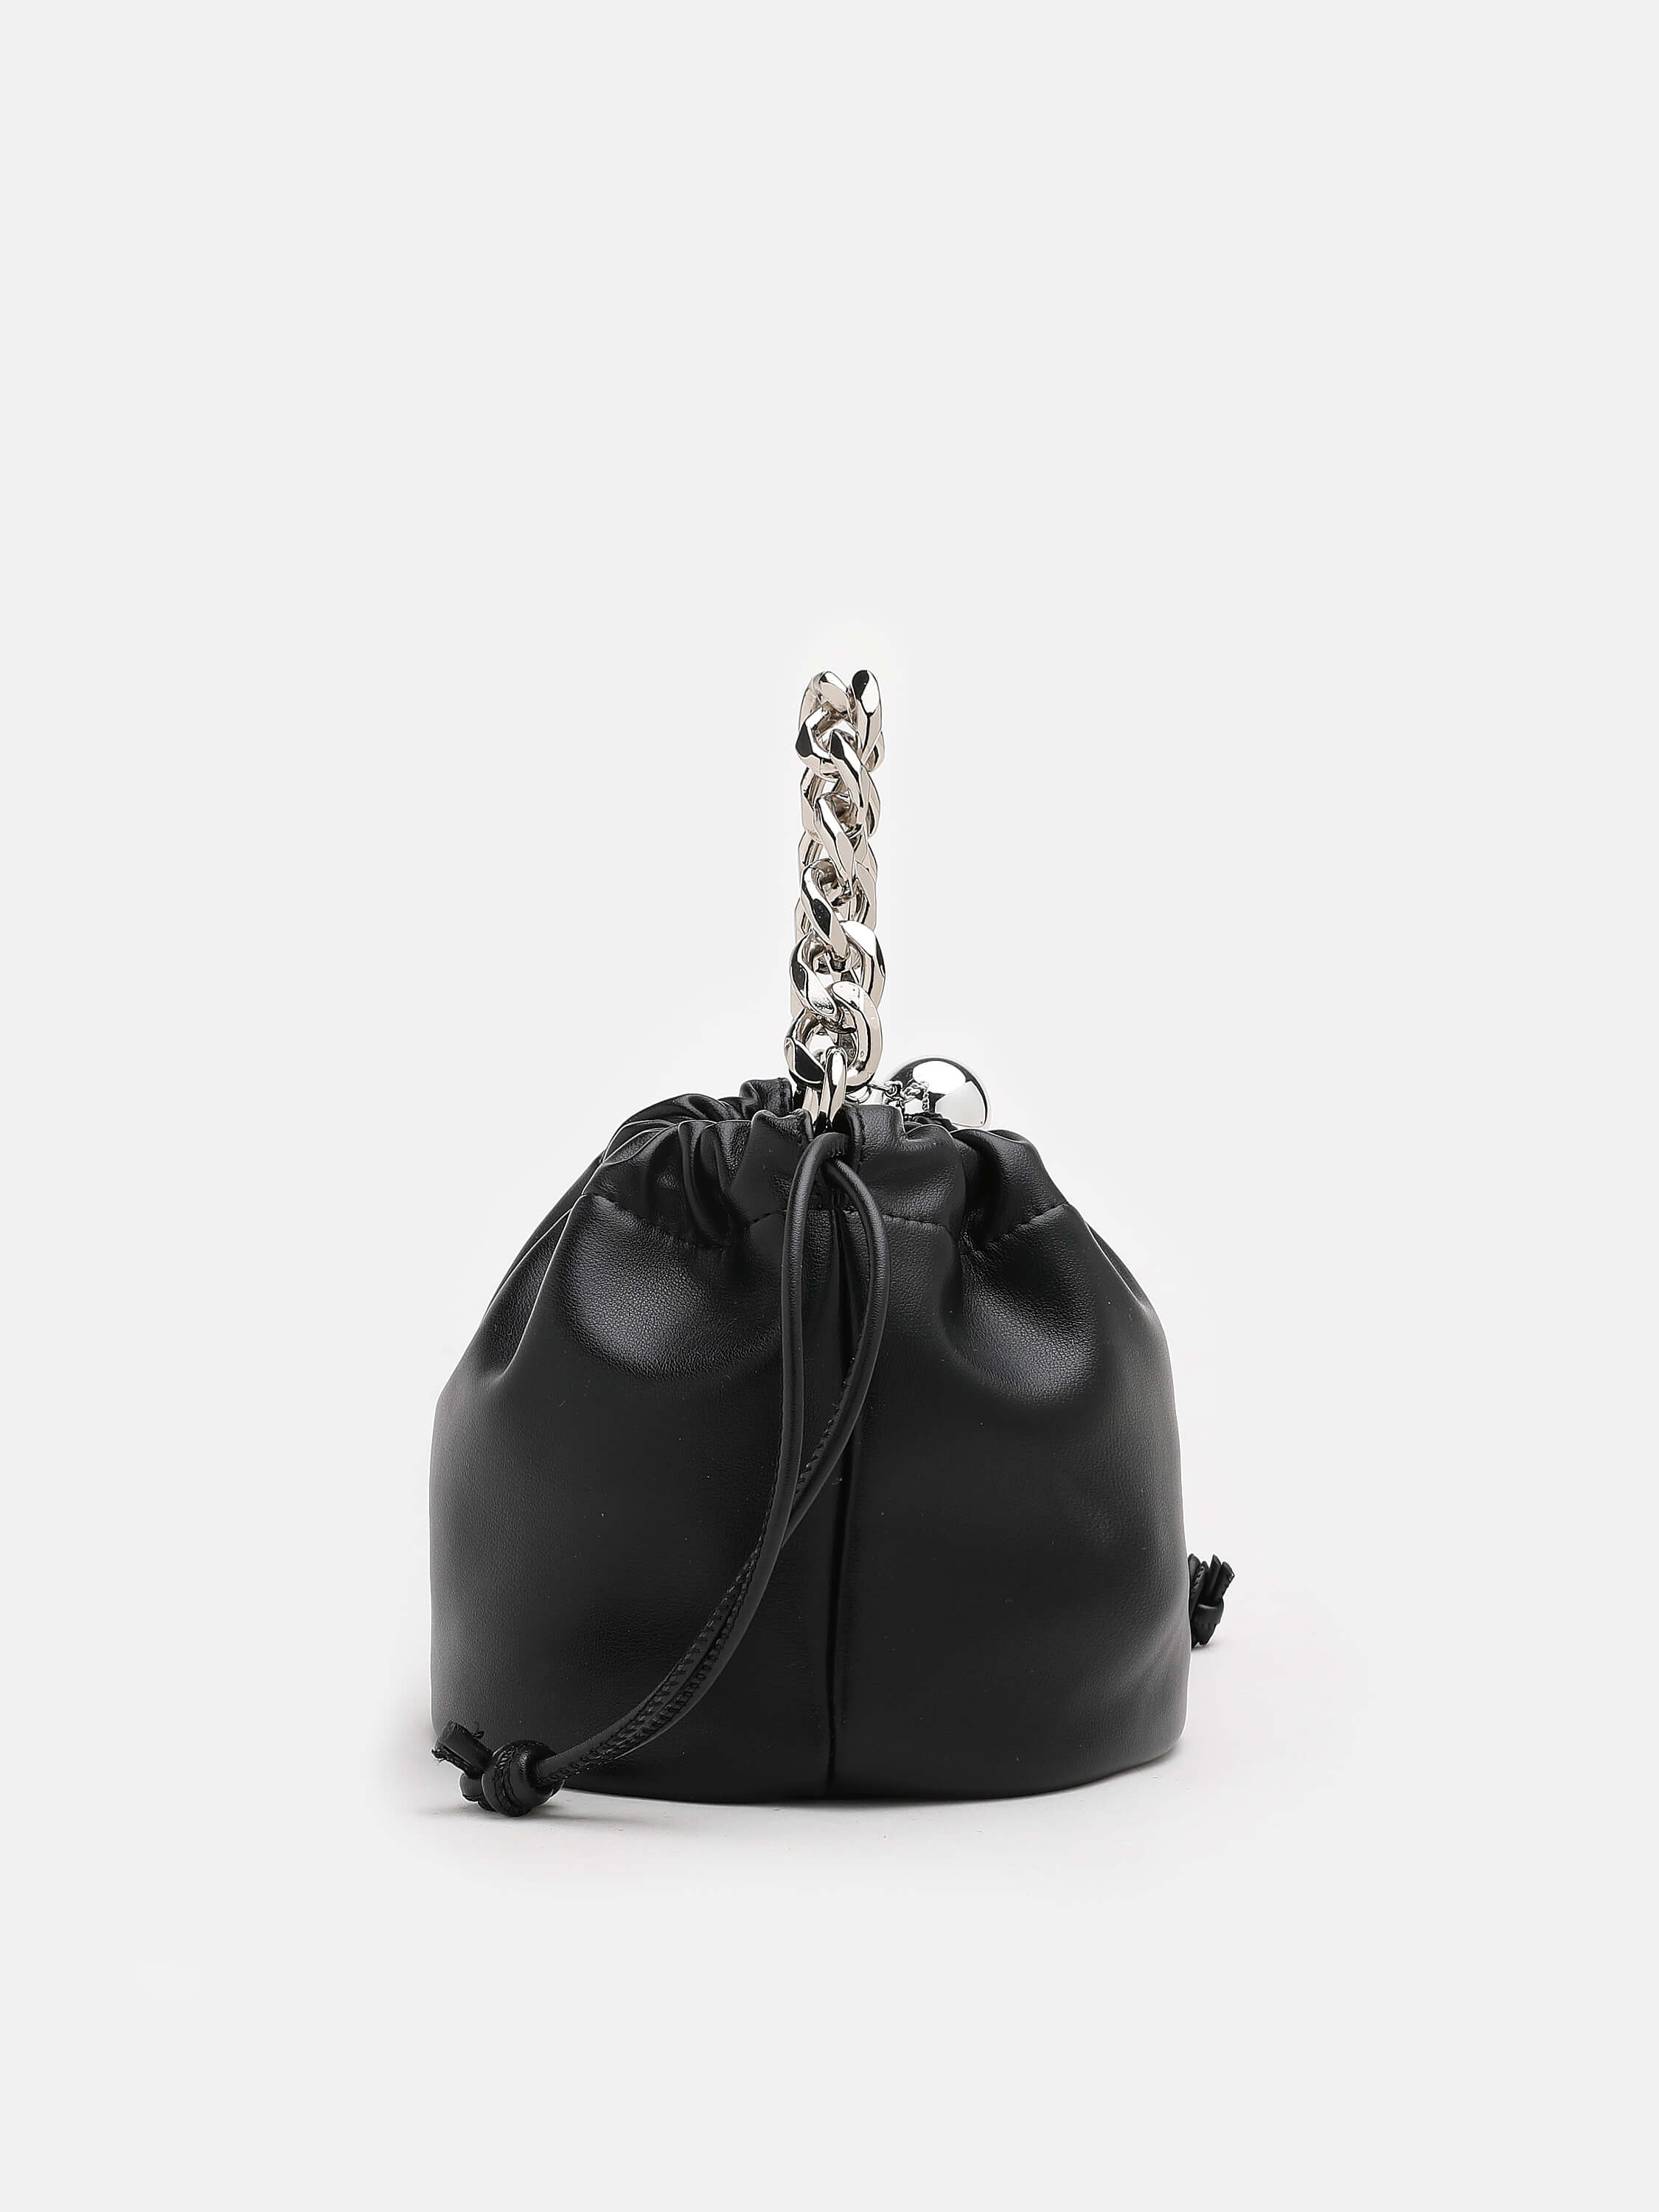 PAZZION, Mavrix Chained Bag, Black